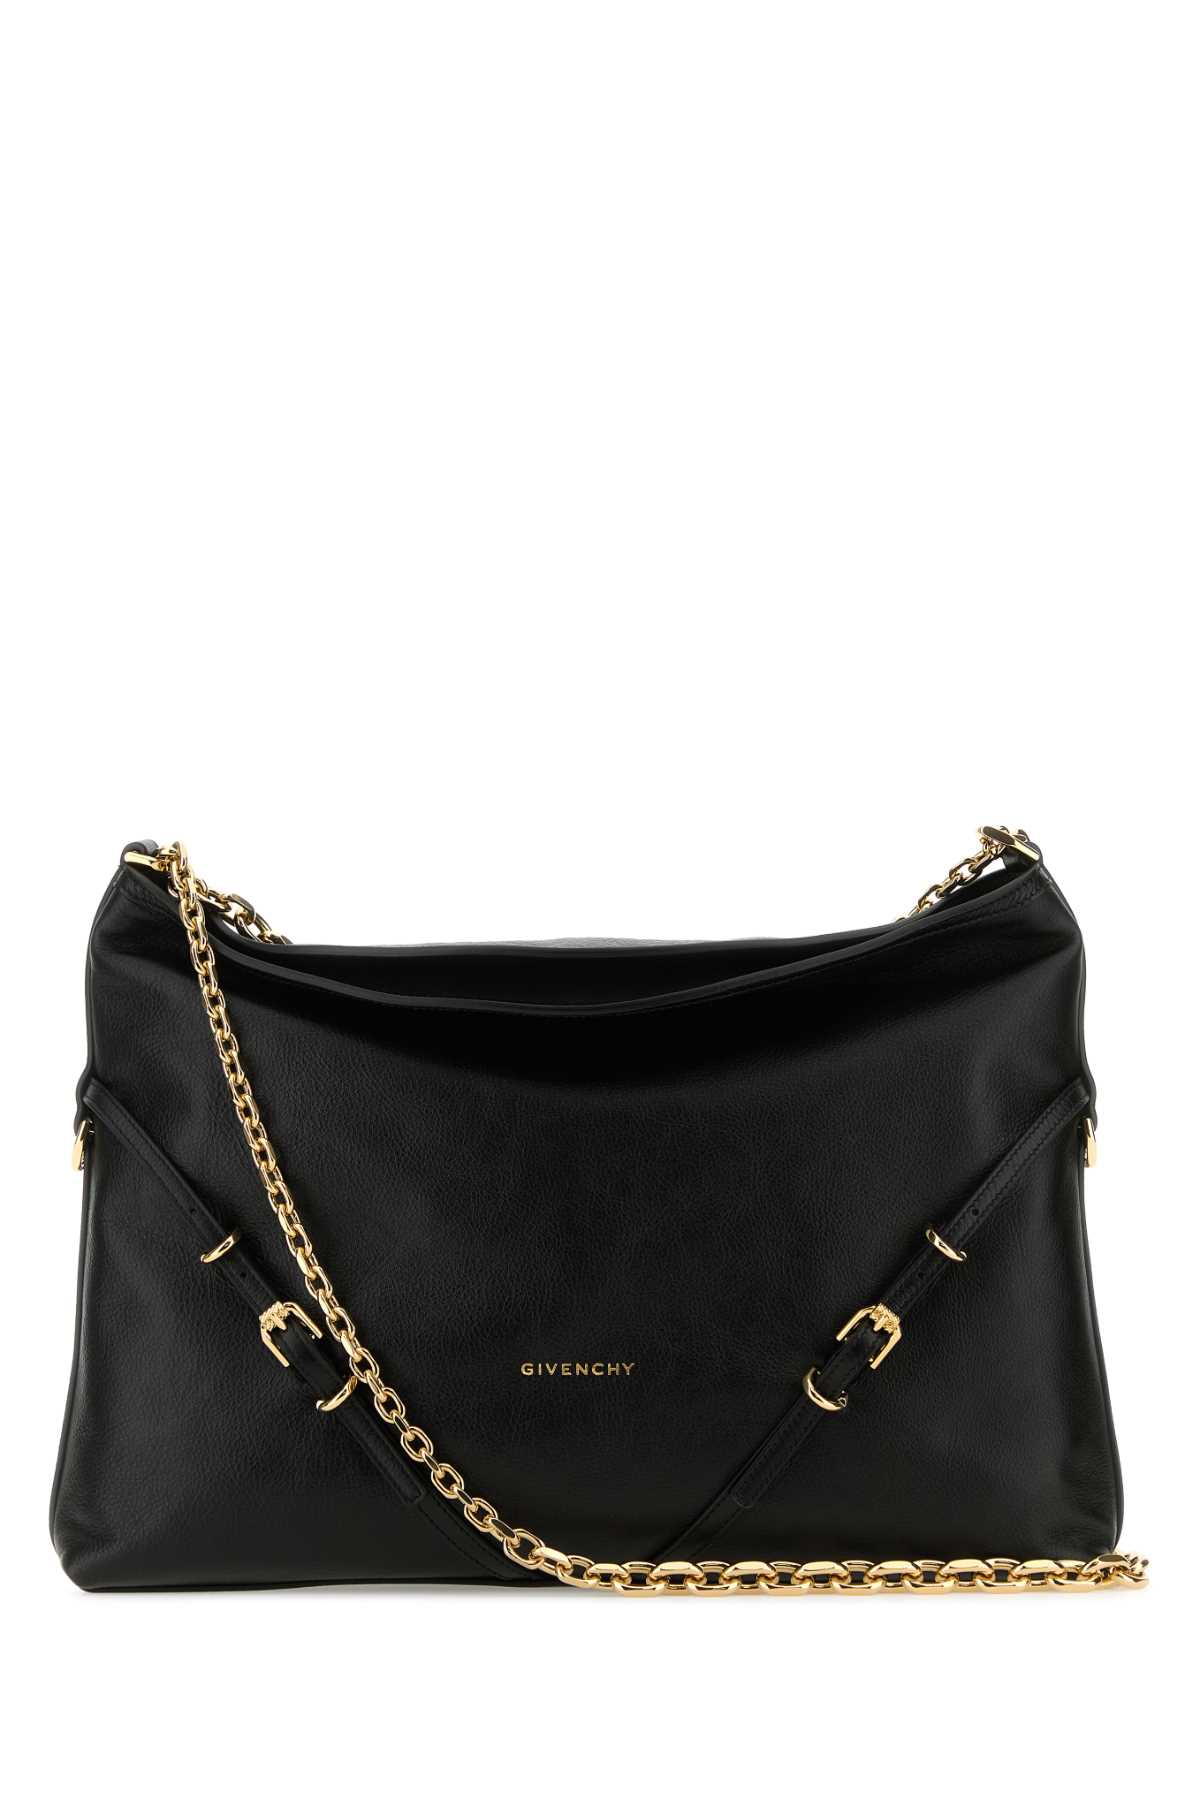 Givenchy Black Leather Voyou Chain Shoulder Bag